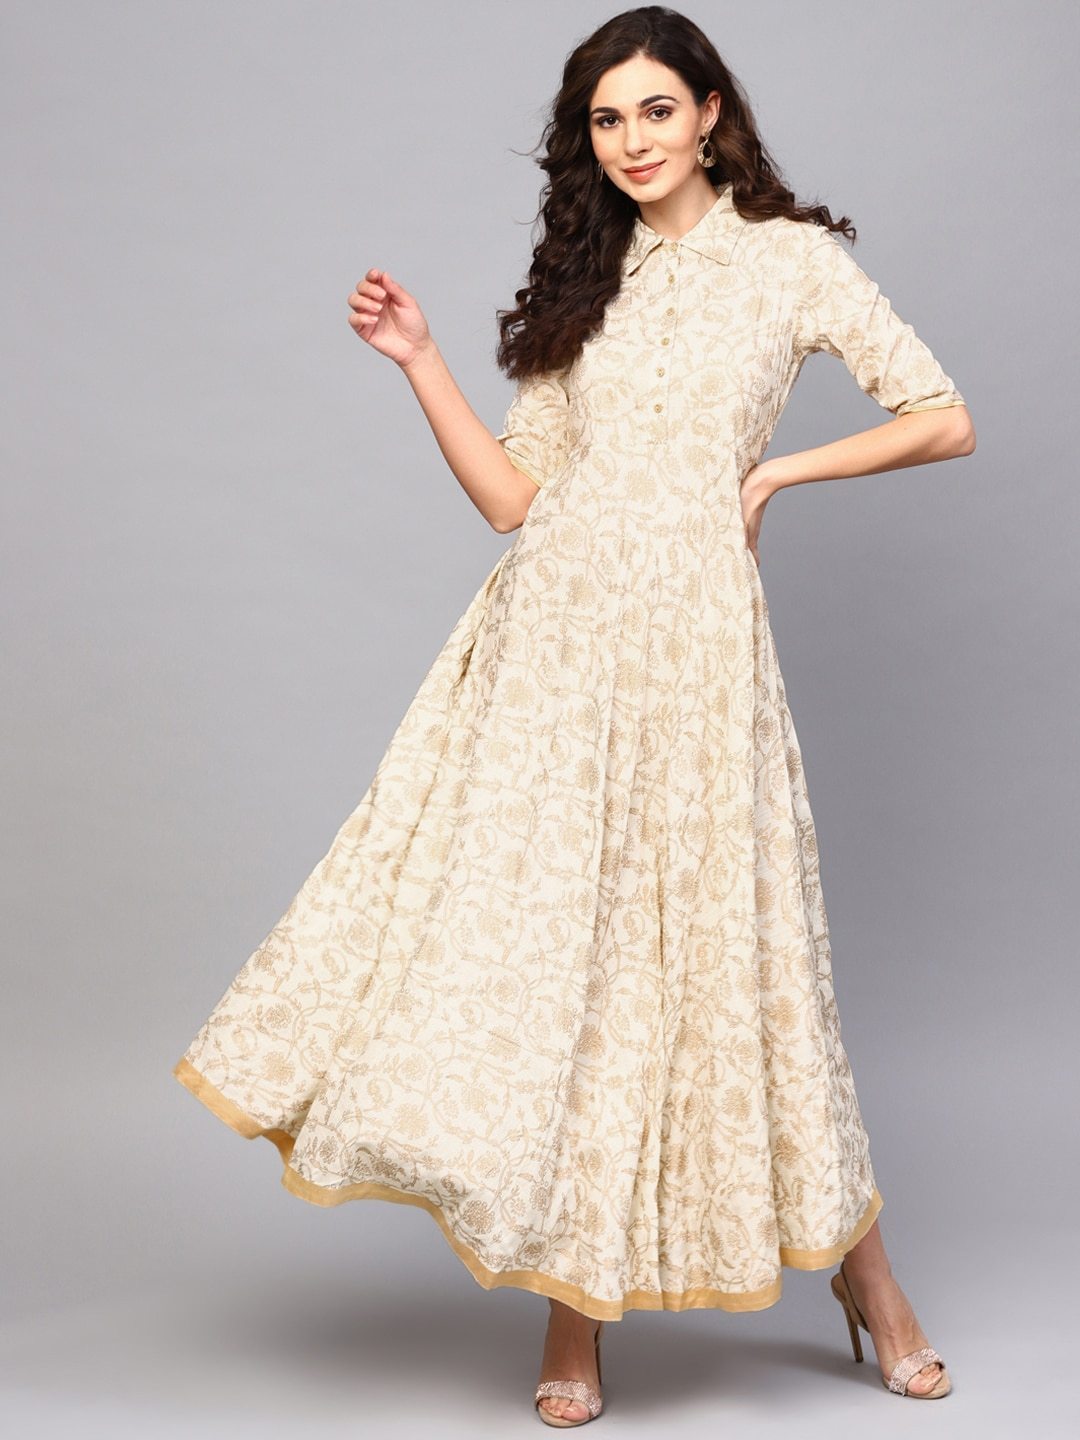 Women's  Off-White & Golden Printed Maxi Dress - AKS